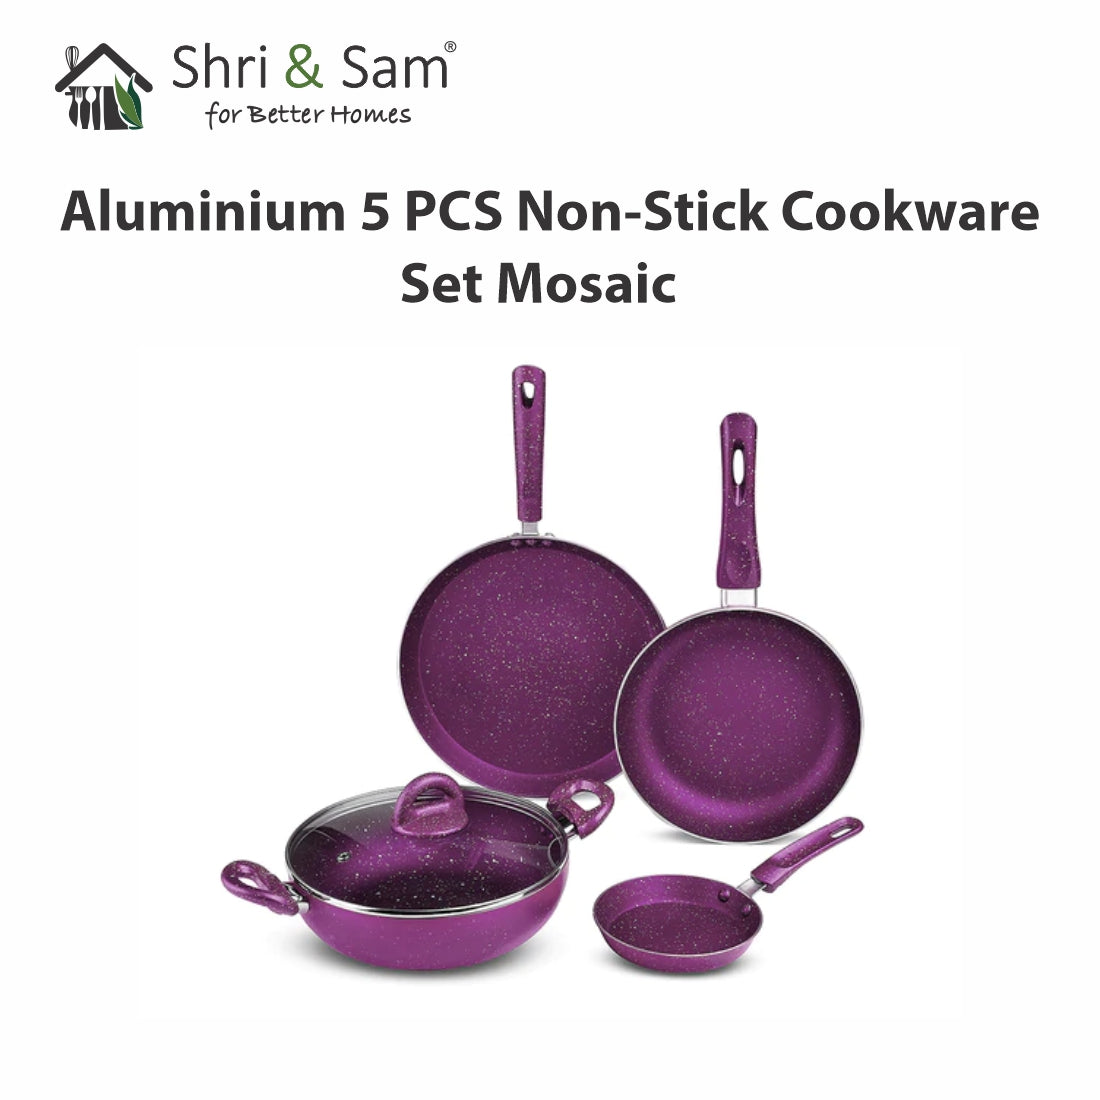 Aluminium 5 PCS Non-Stick Cookware Set Mosaic